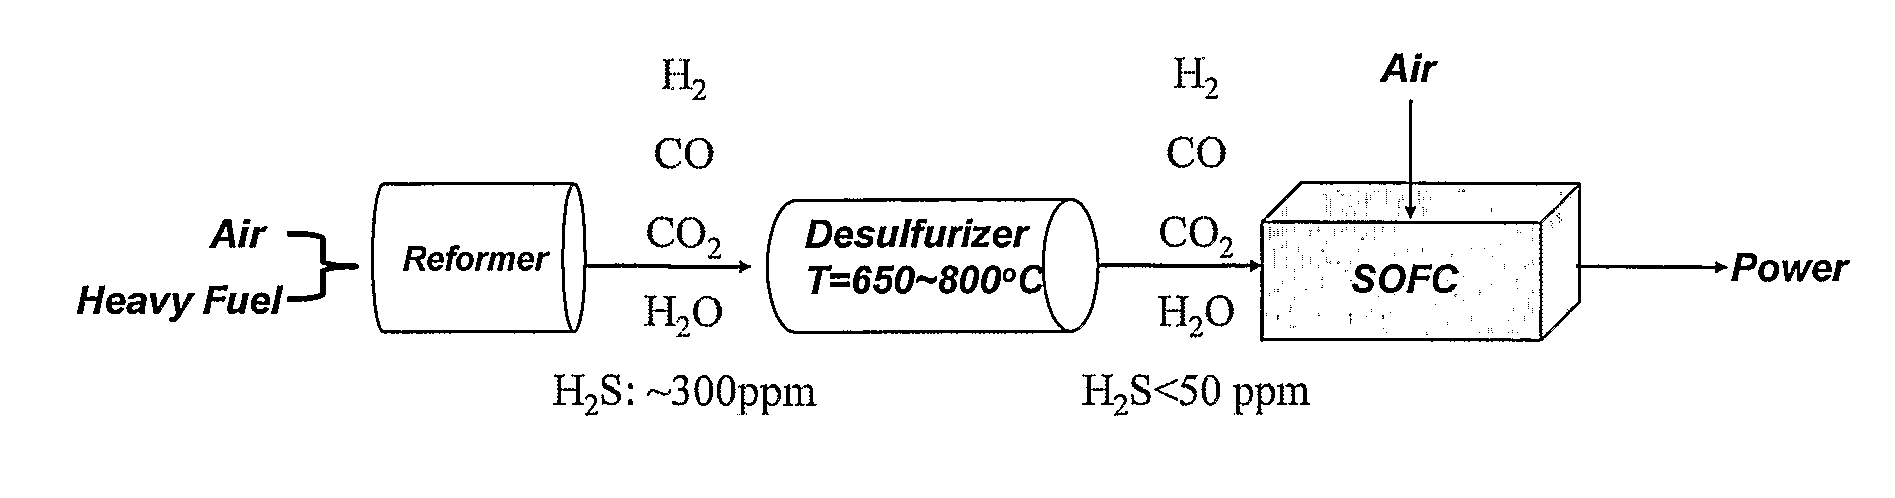 Apparatus and methods for non-regenerative and regenerative hot gas desulfurization